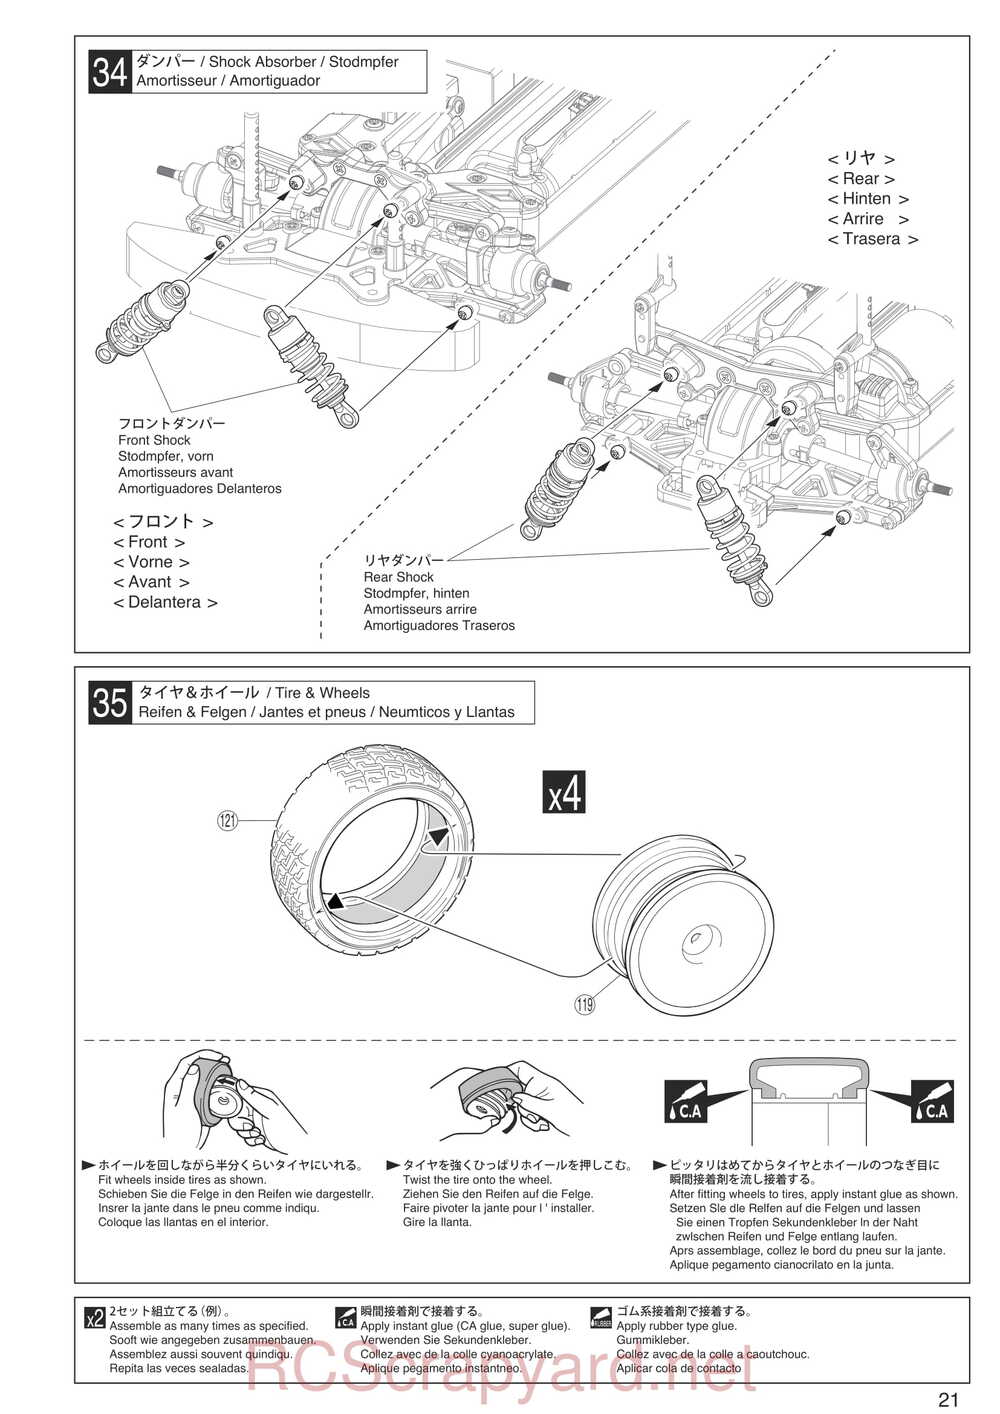 Kyosho - 30912 - EP Fazer Rally - Manual - Page 21